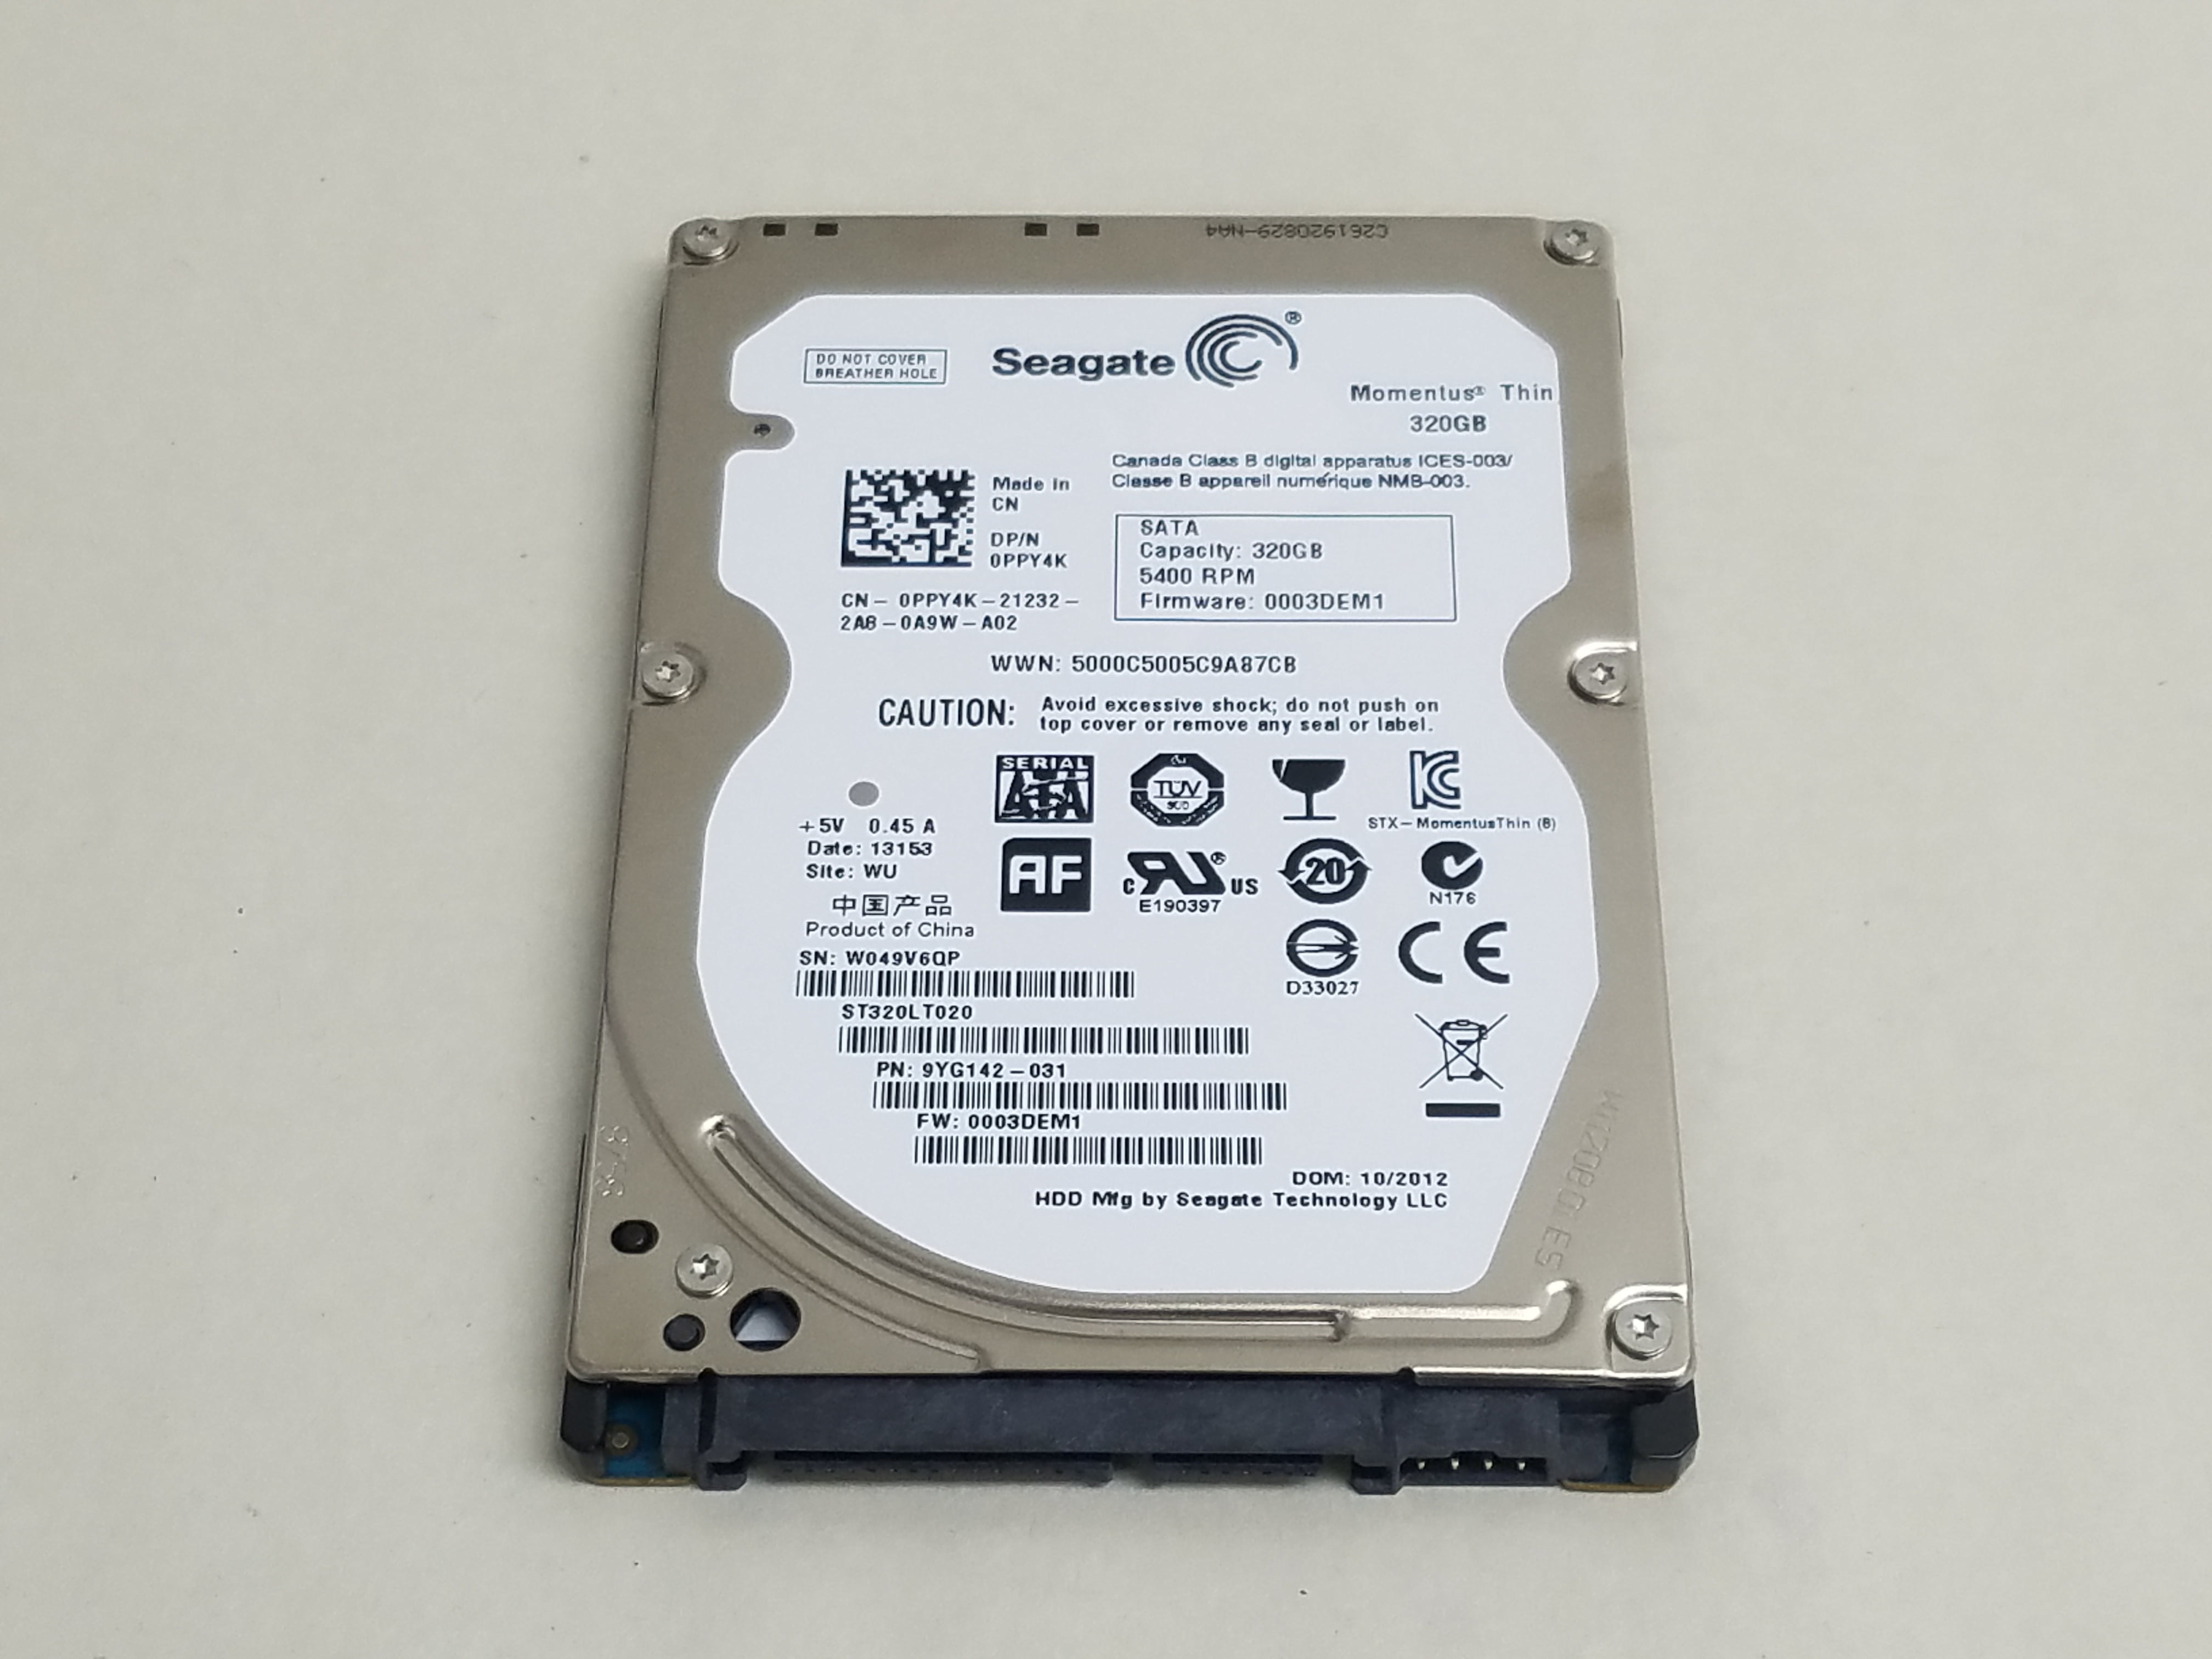 Refurbished Seagate Momentus Thin ST320LT020 320GB 2.5" SATA II Laptop Hard Drive